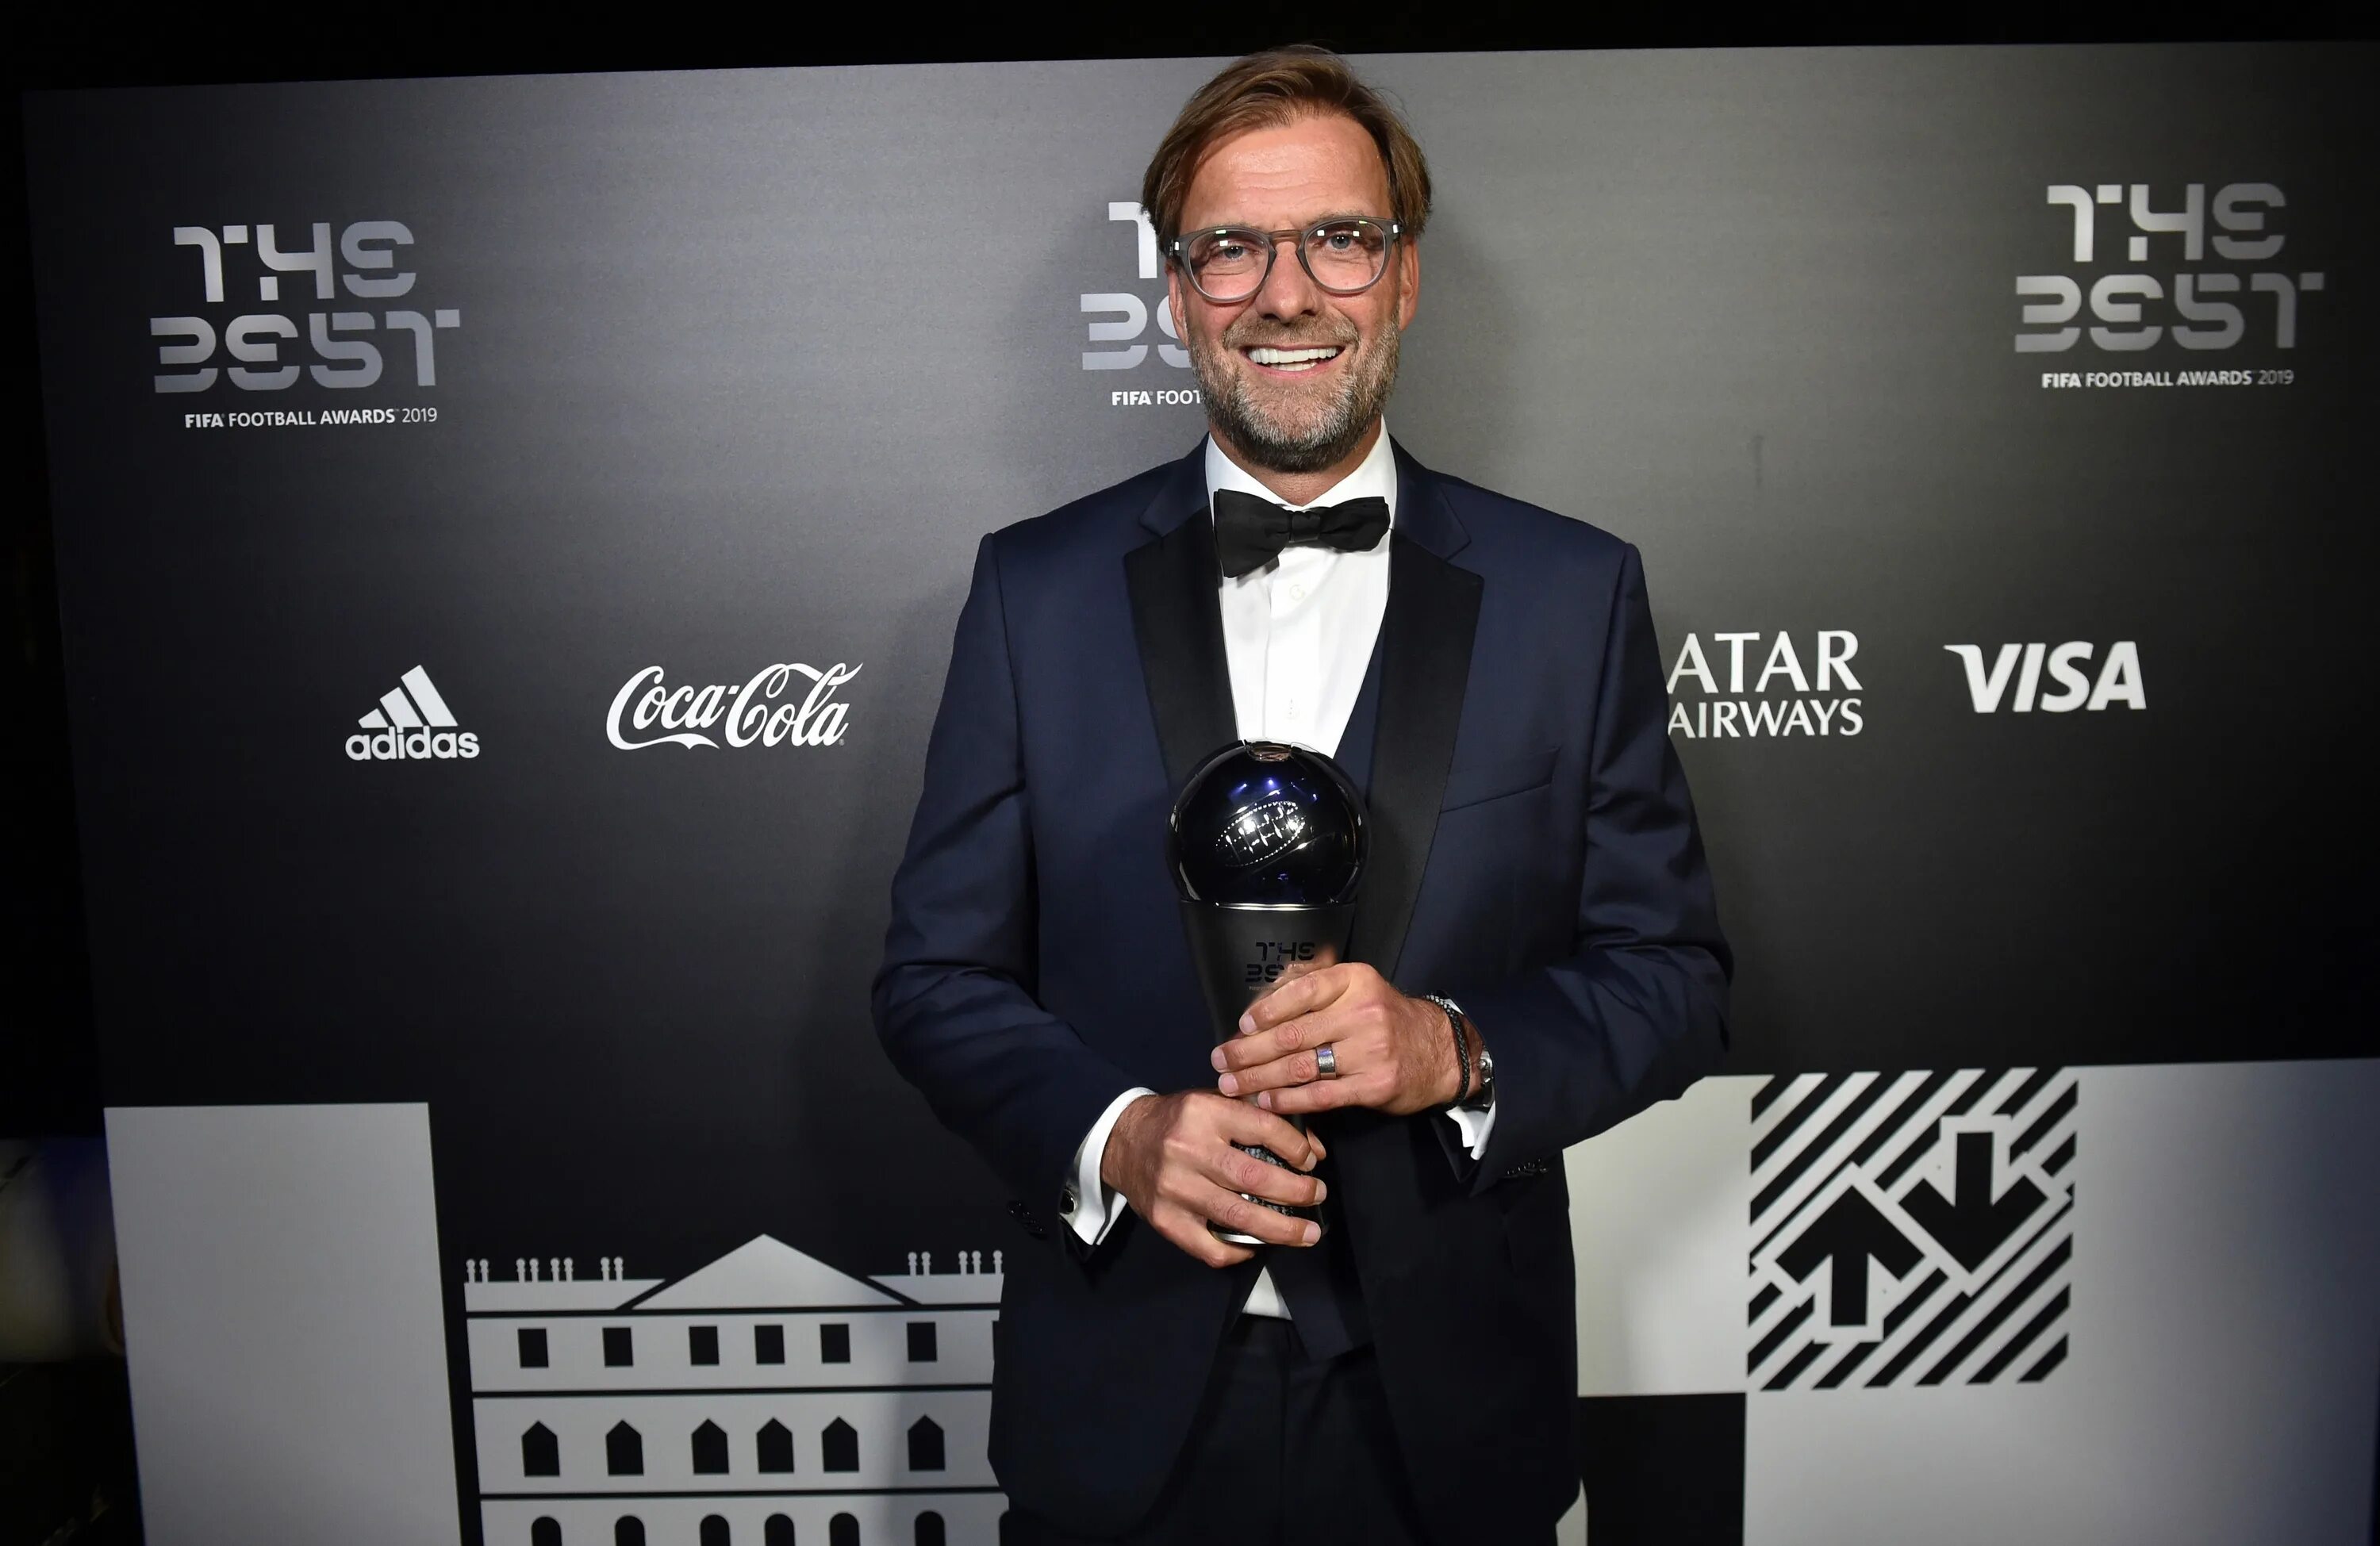 Награда 2019. Клопп тренер ФИФА. The best FIFA Football Awards 2019. The best FIFA Football coach Awards. Тренер года.